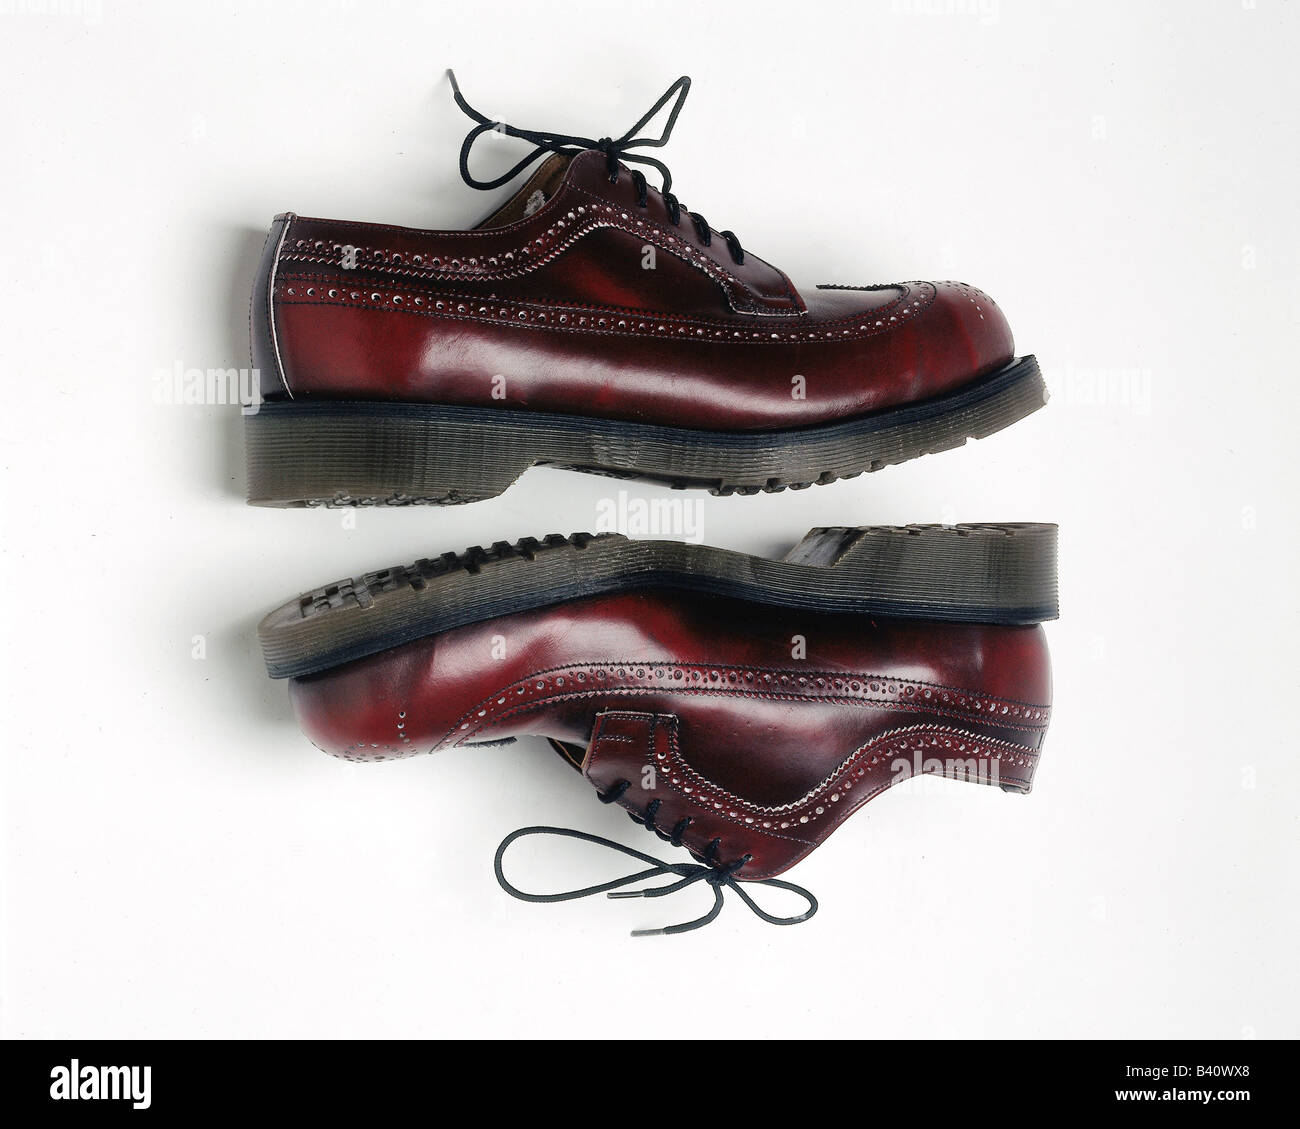 Mode, Schuhe, paar rote Doc Martens, Sicherheitsschuhe mit Stahlkappe  Kappe, Schuh Stockfotografie - Alamy